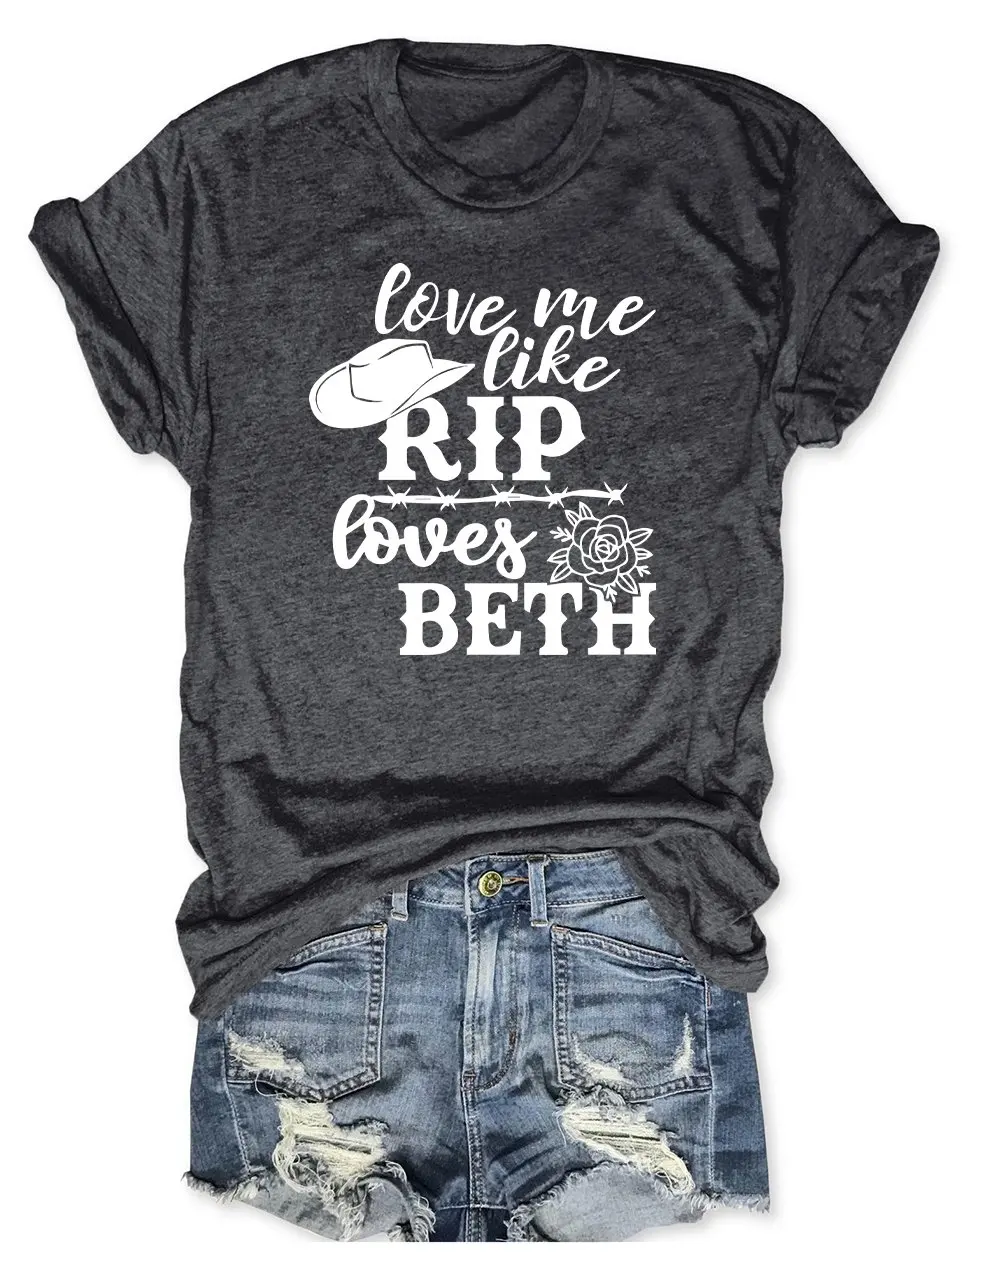 

Rheaclot Love Me Like Rip Loves Beth Women's Cotton T-shirt Ladies Graphic Tee Tops